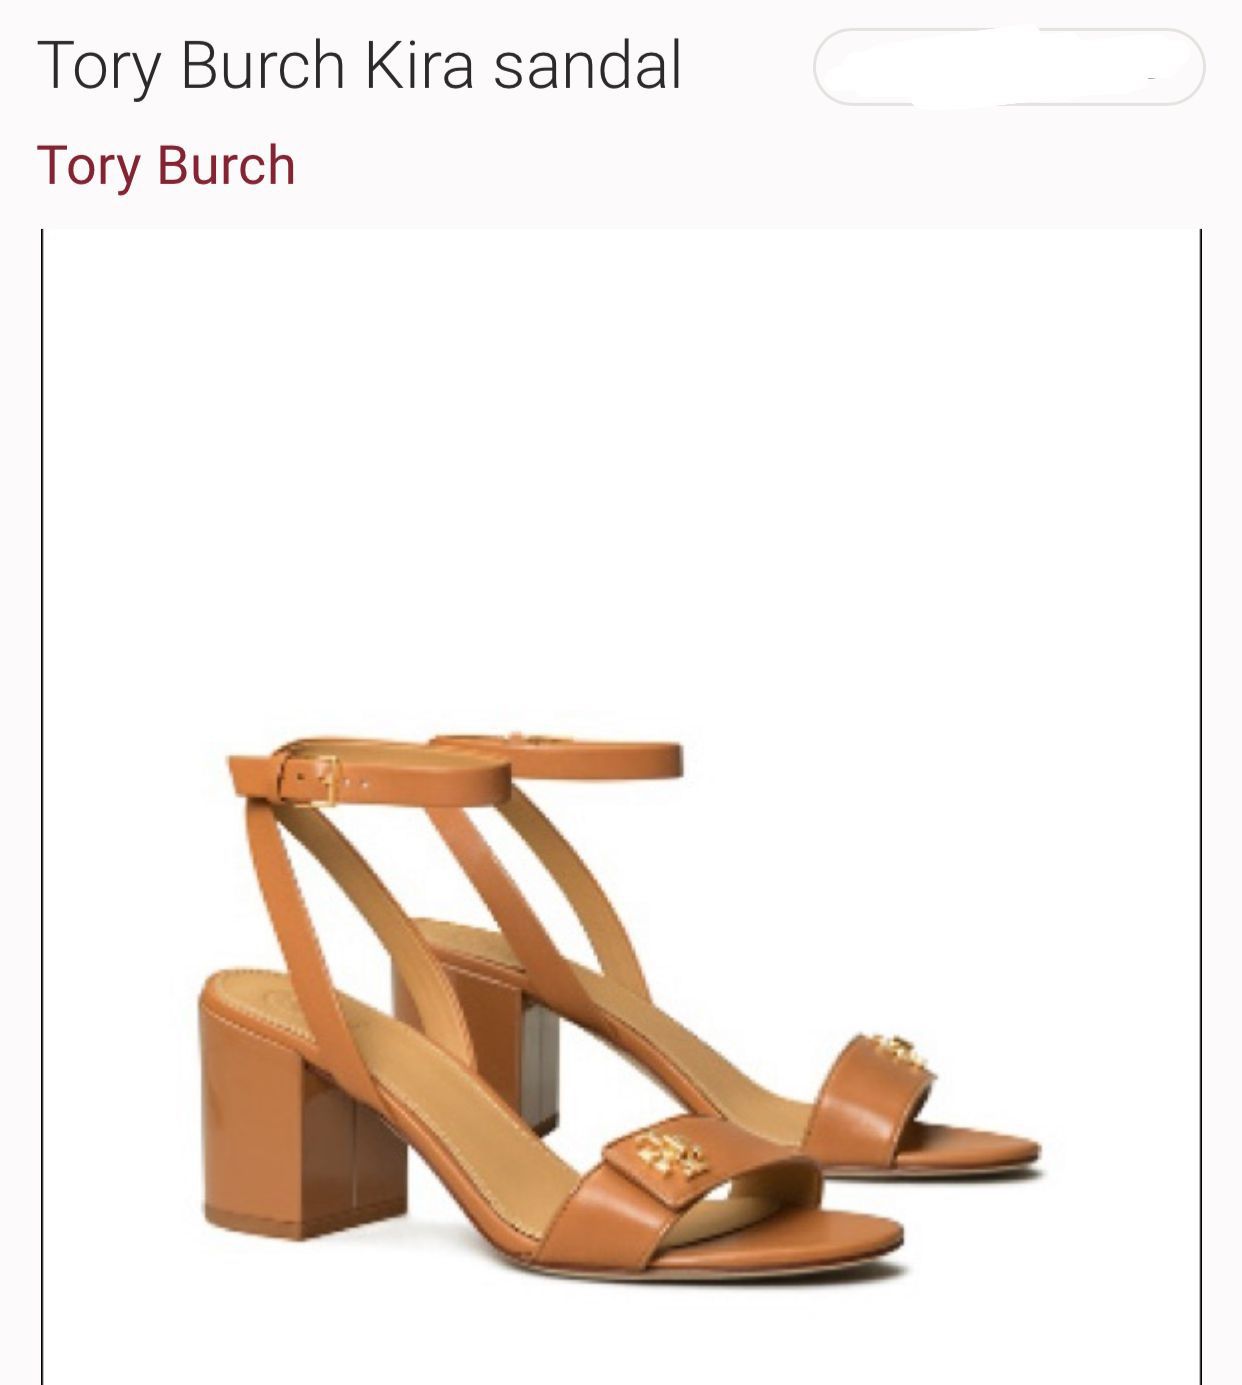 tory burch kira sandal